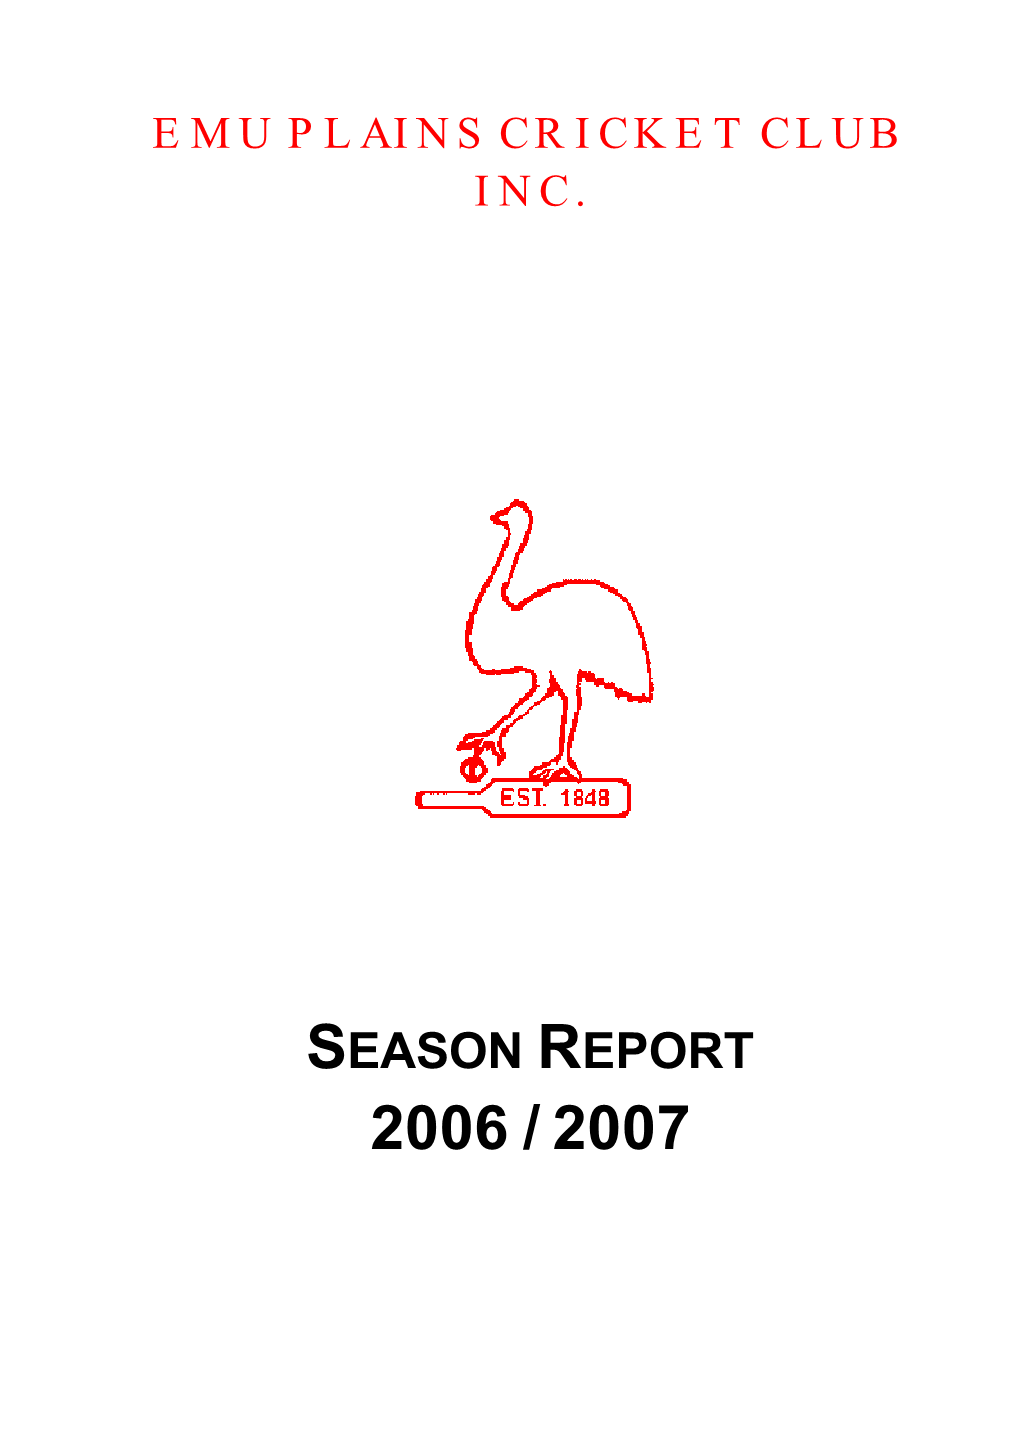 Season Report 2006 / 2007